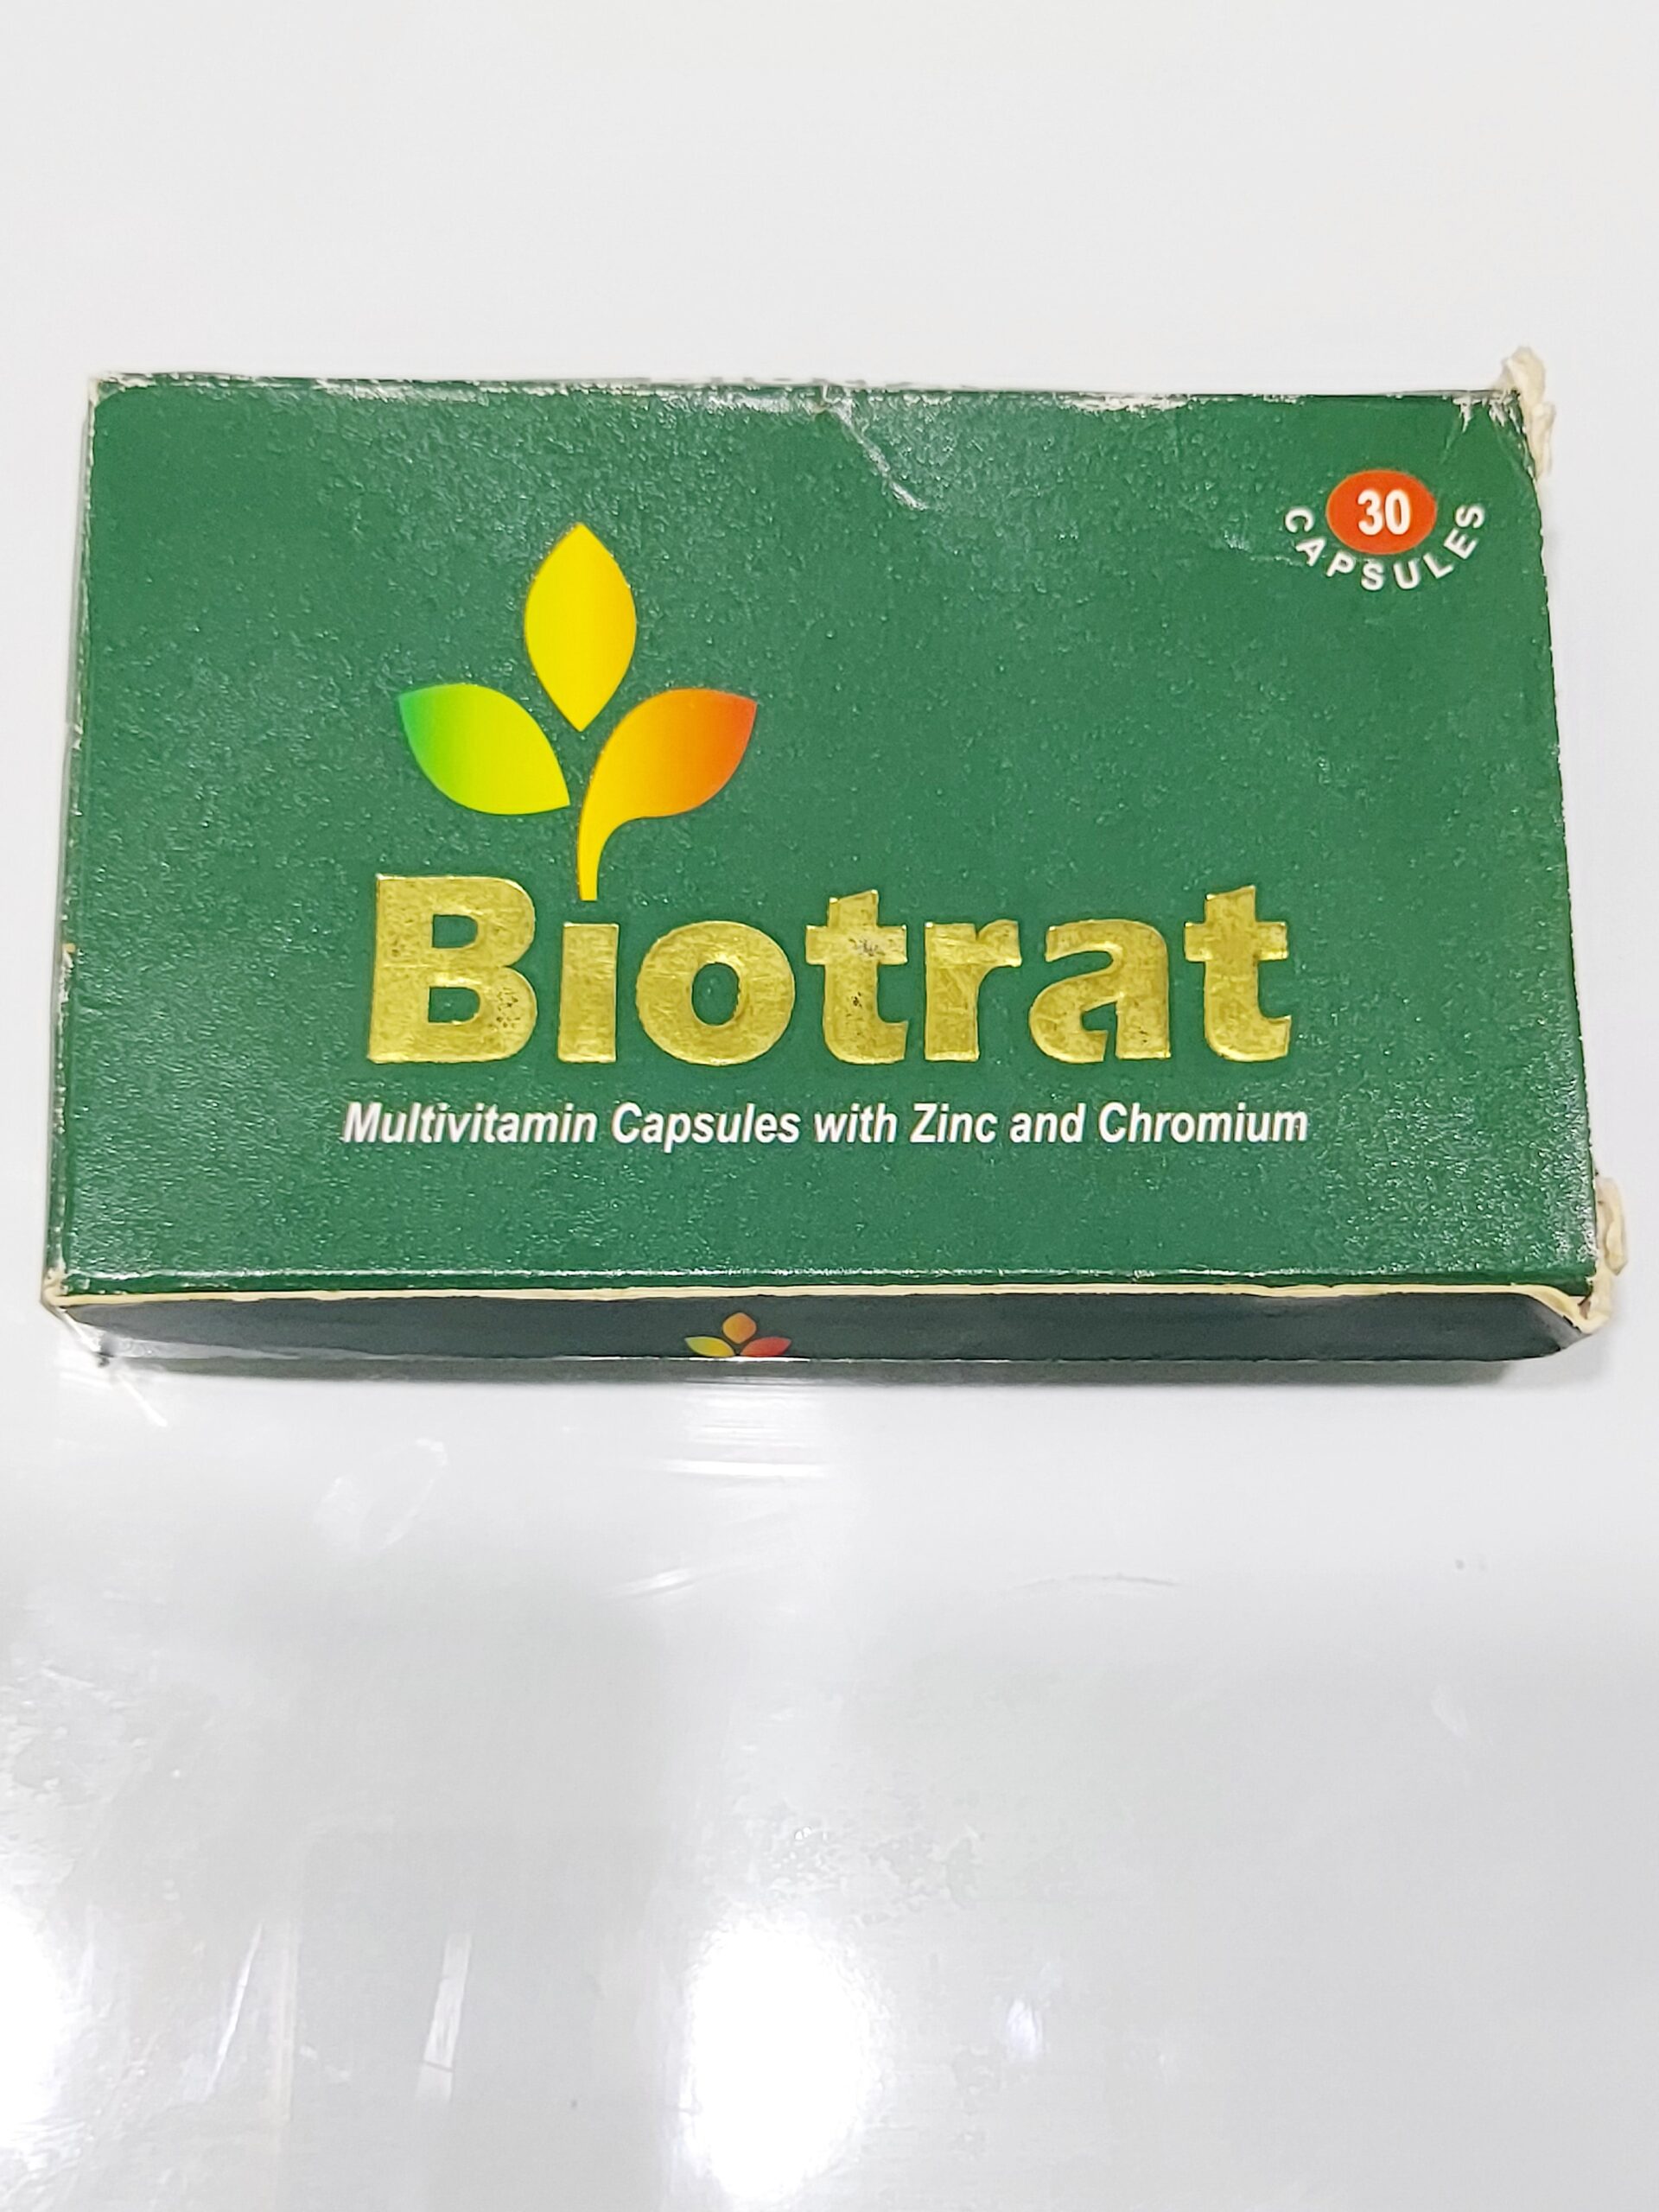 Biotrat